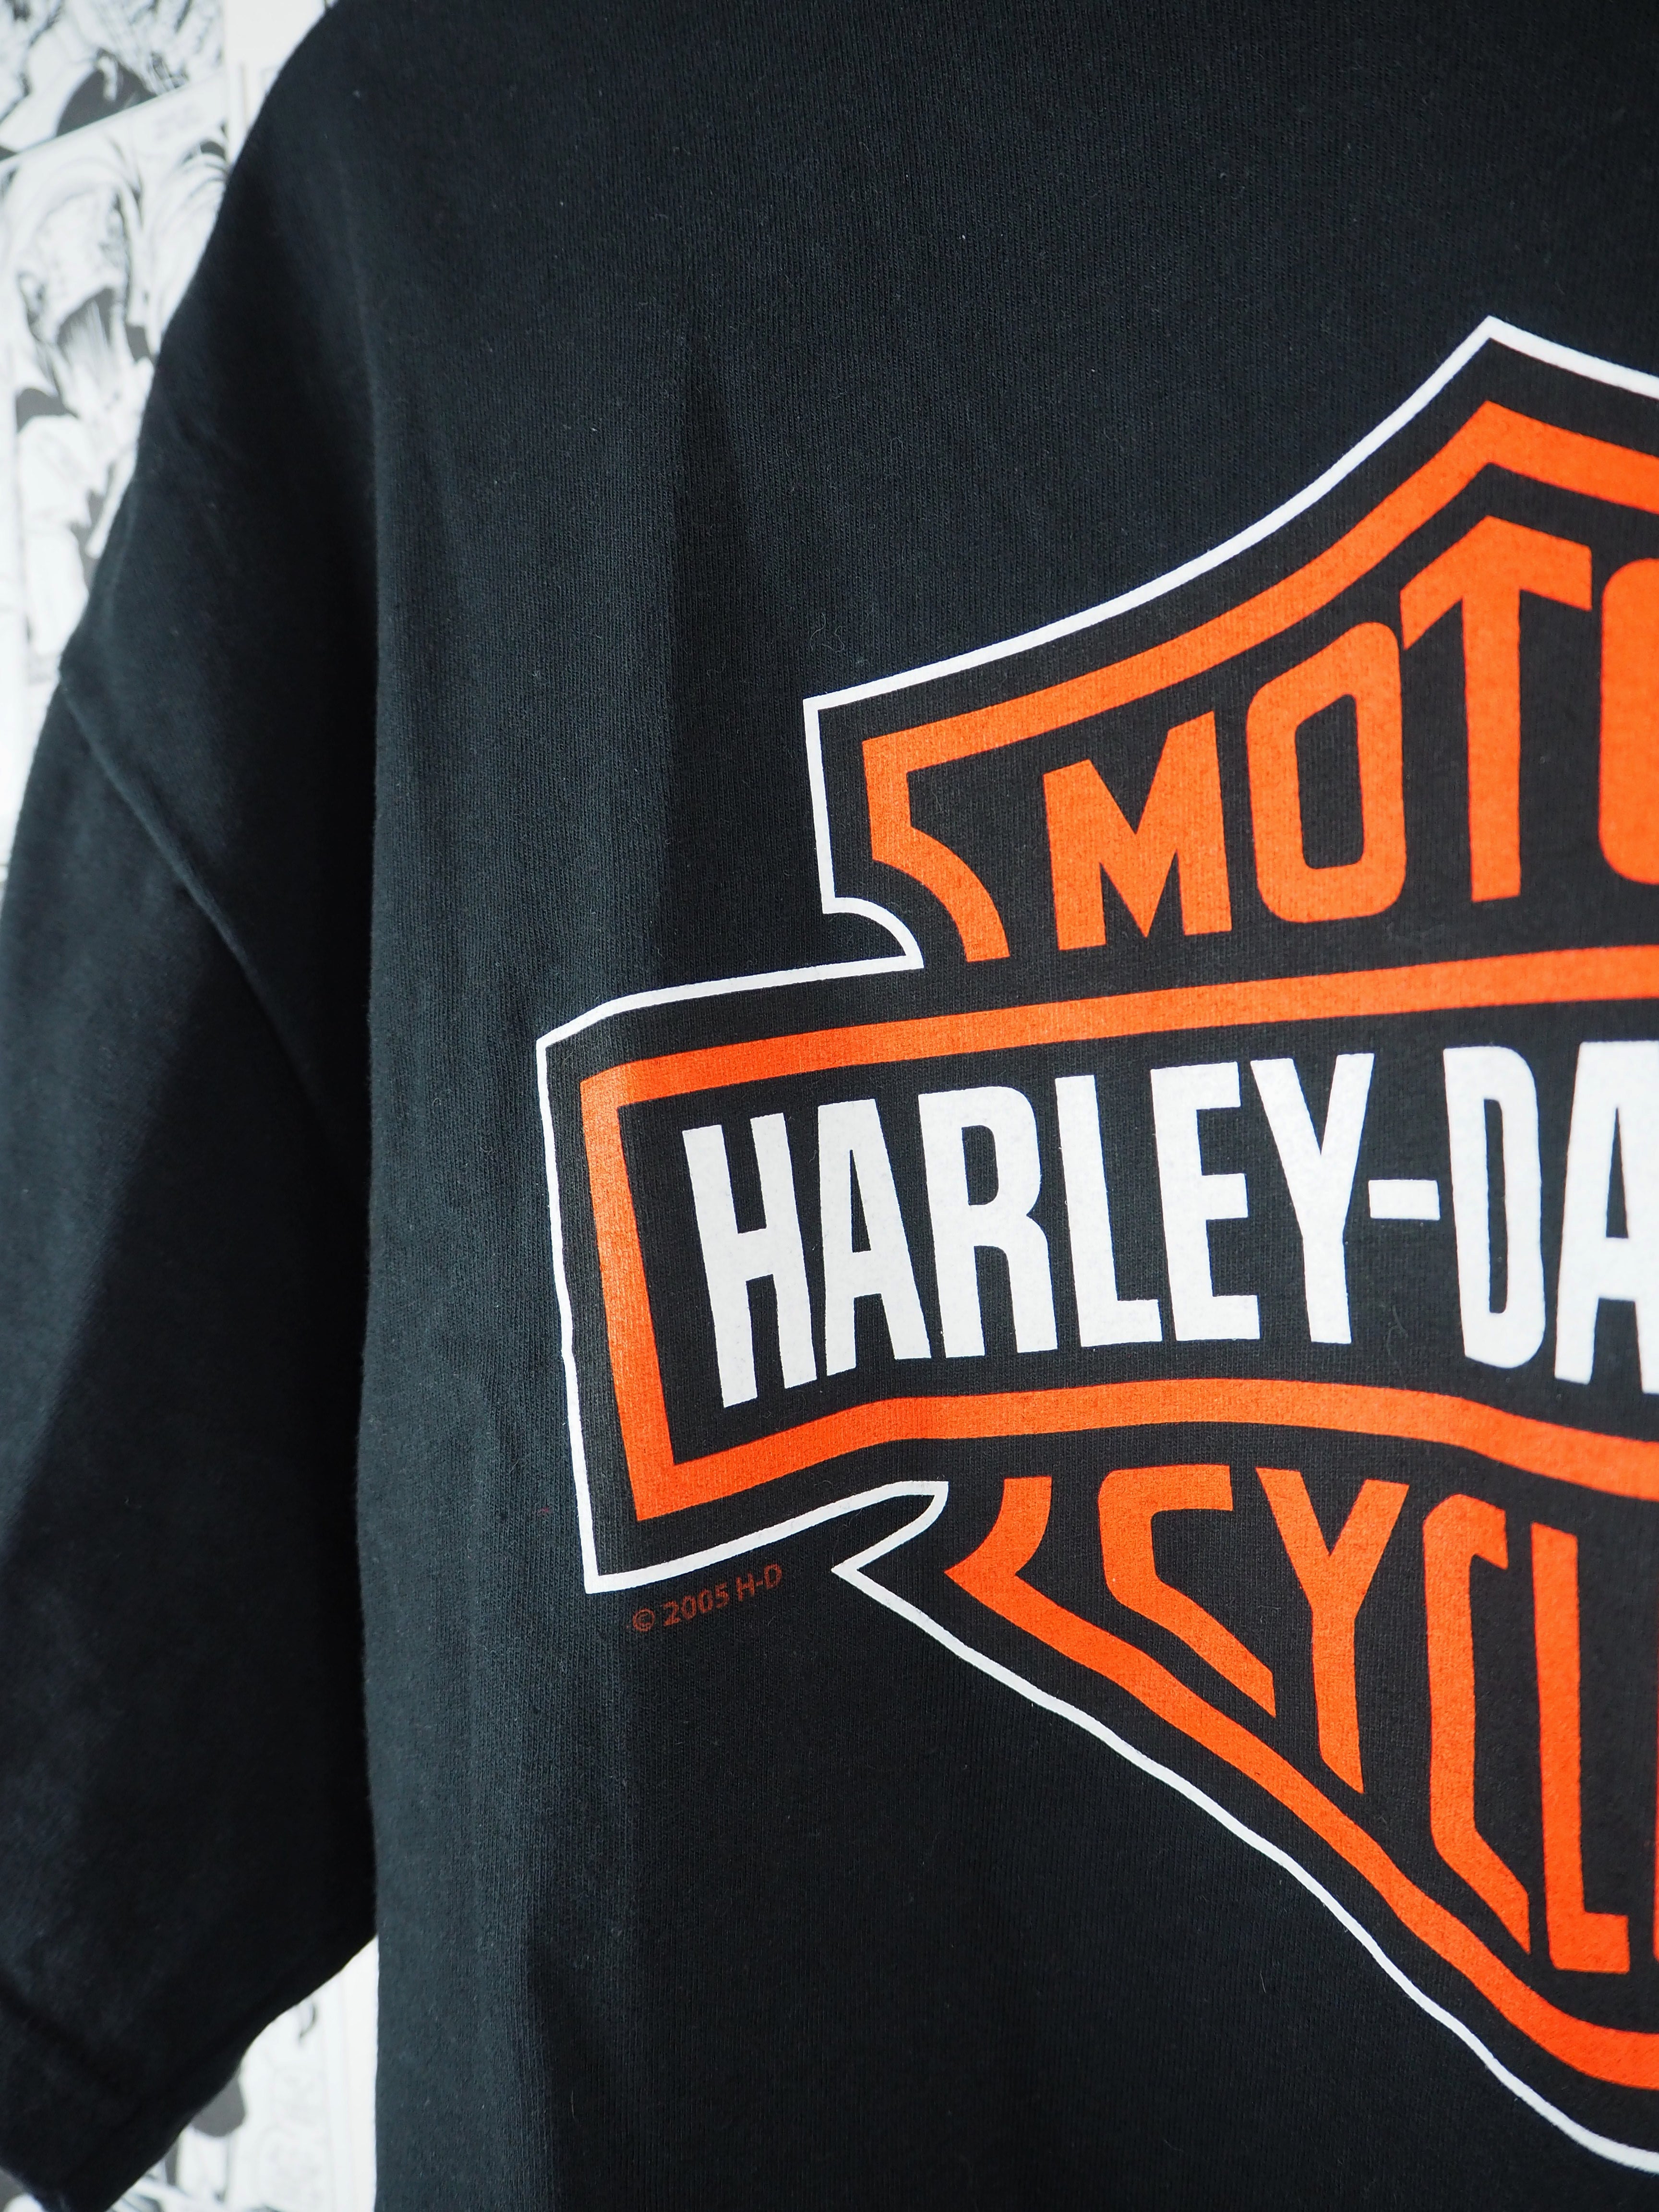 Vintage Harley Davidson "Norway" 2005